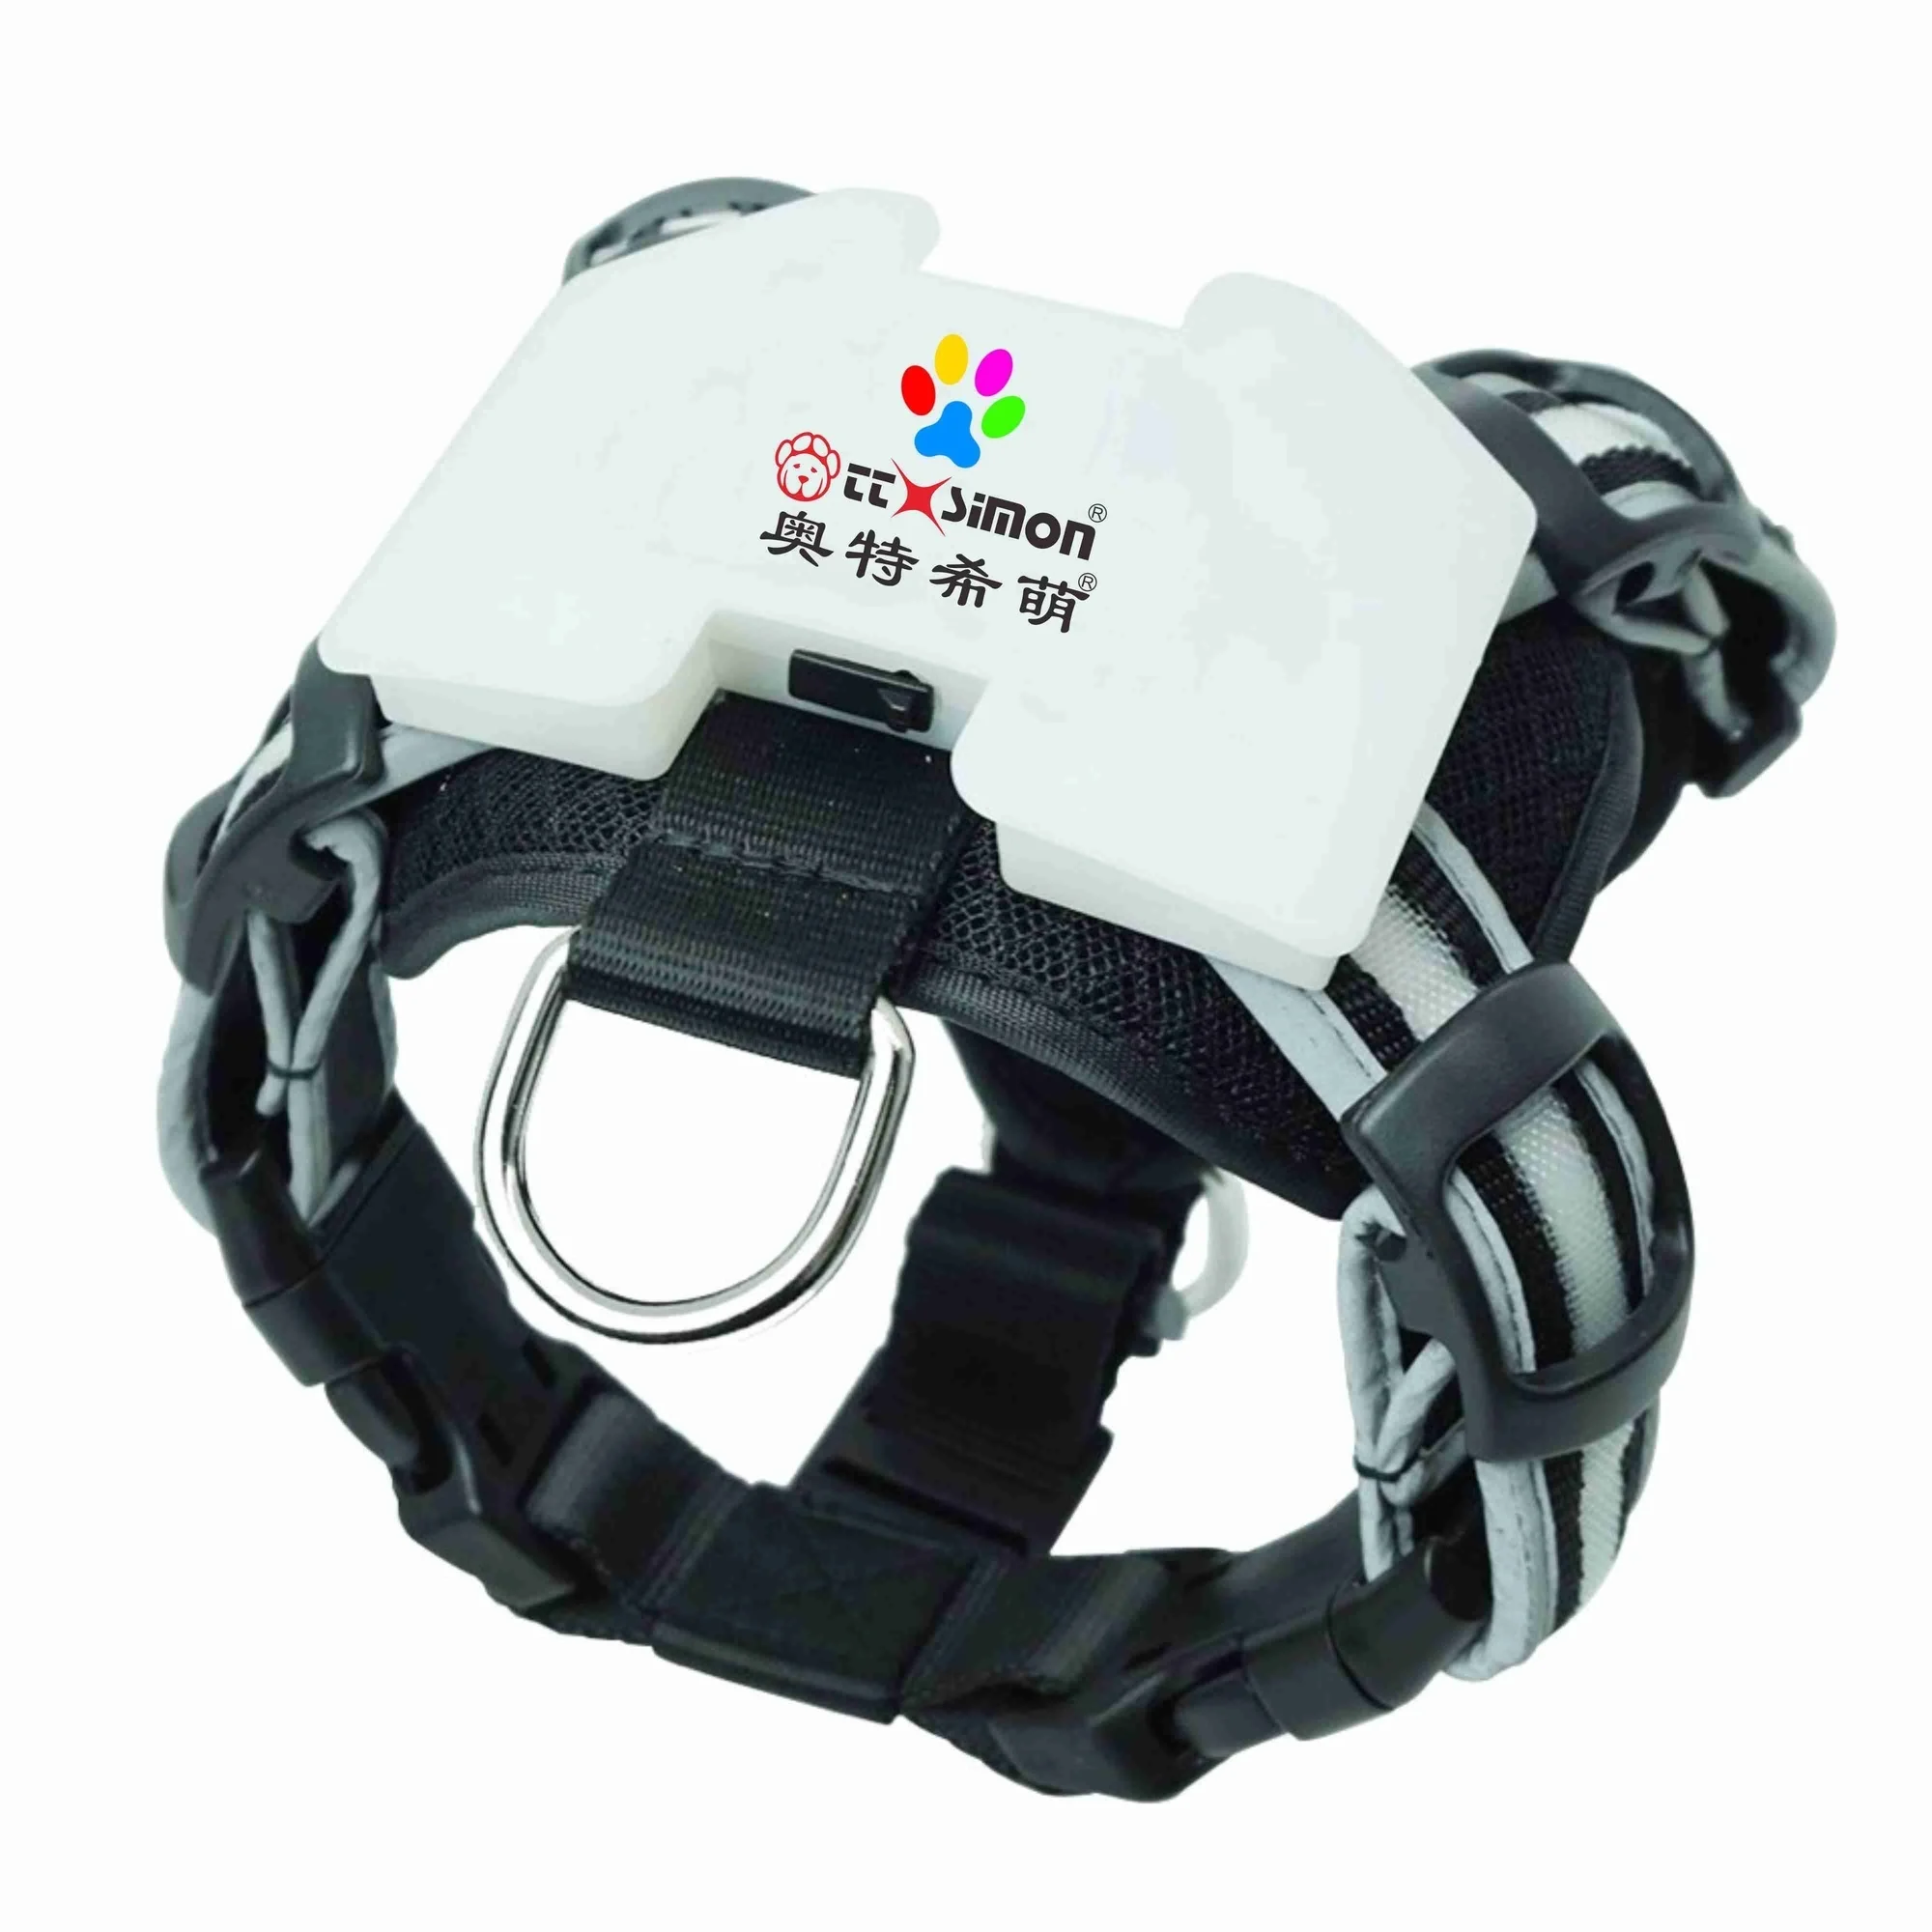 

cc simon harness dog led light service dog harness Factory direct sale LED flashing dog harness with high quality